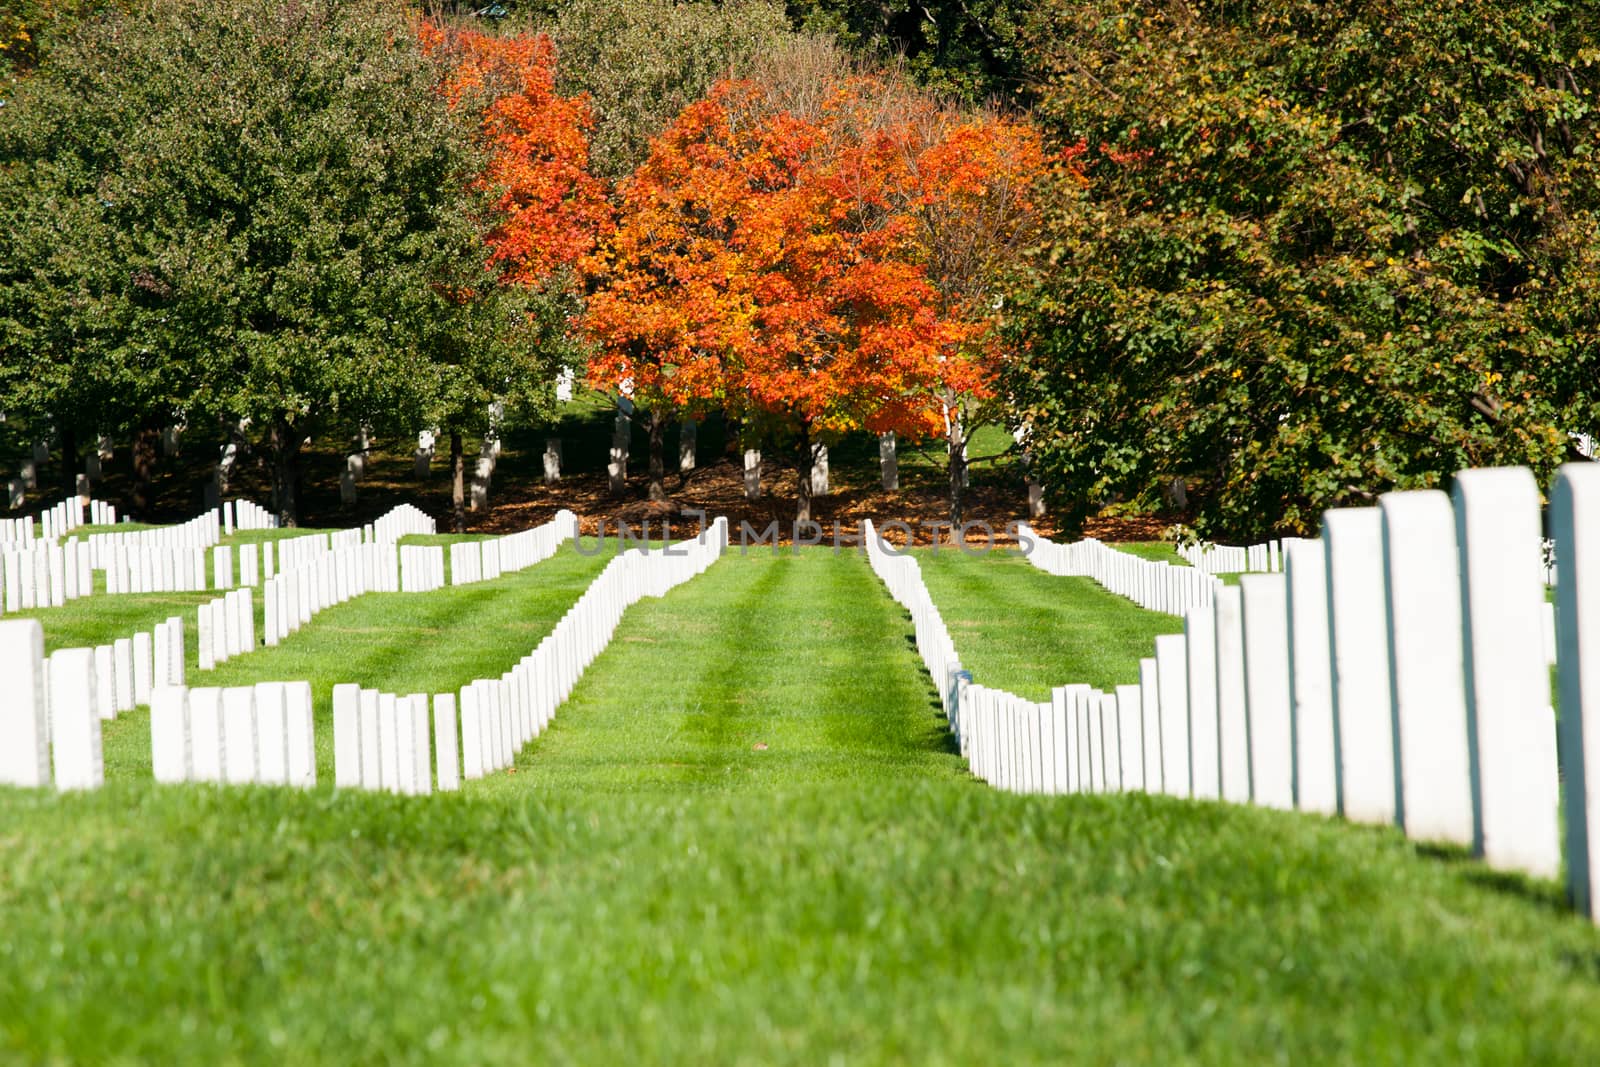 Arlington USA- October 26 2014; Leading lines of Arlington National Cemetery headstones inhistoric graveyard of national servicemen and heroes in Virginia across brideg from Lincoln Memorial.